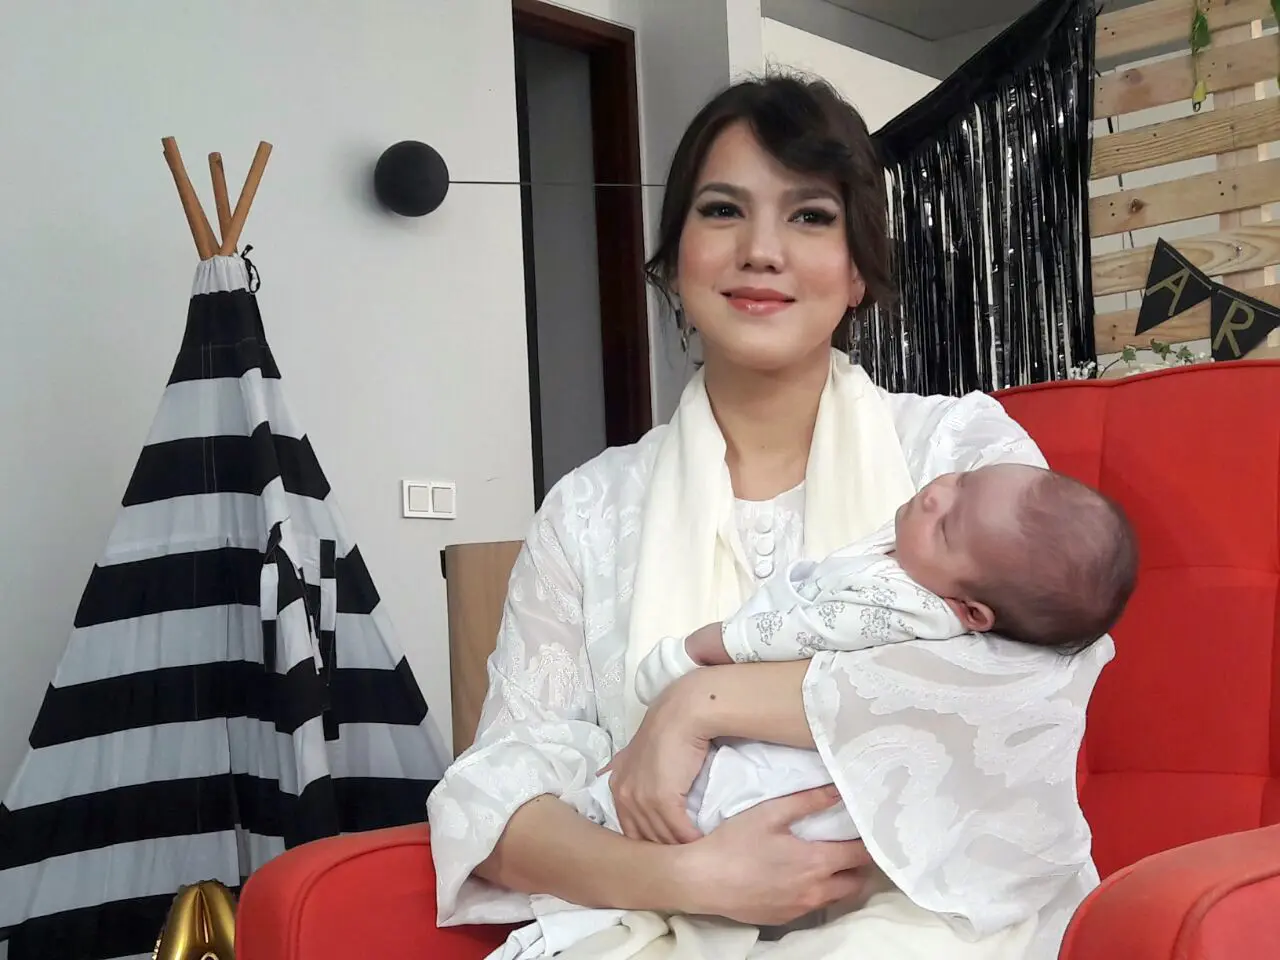 Bayi perempuan yang bernama Alita Naora Lawi ini memang belum genap berusia dua bulan, namun menurut sang ibu, anak perempuannya ini sudah menunjukkan perkembangan yang menggembirakan. (Nurwahyunan/Bintang.com)